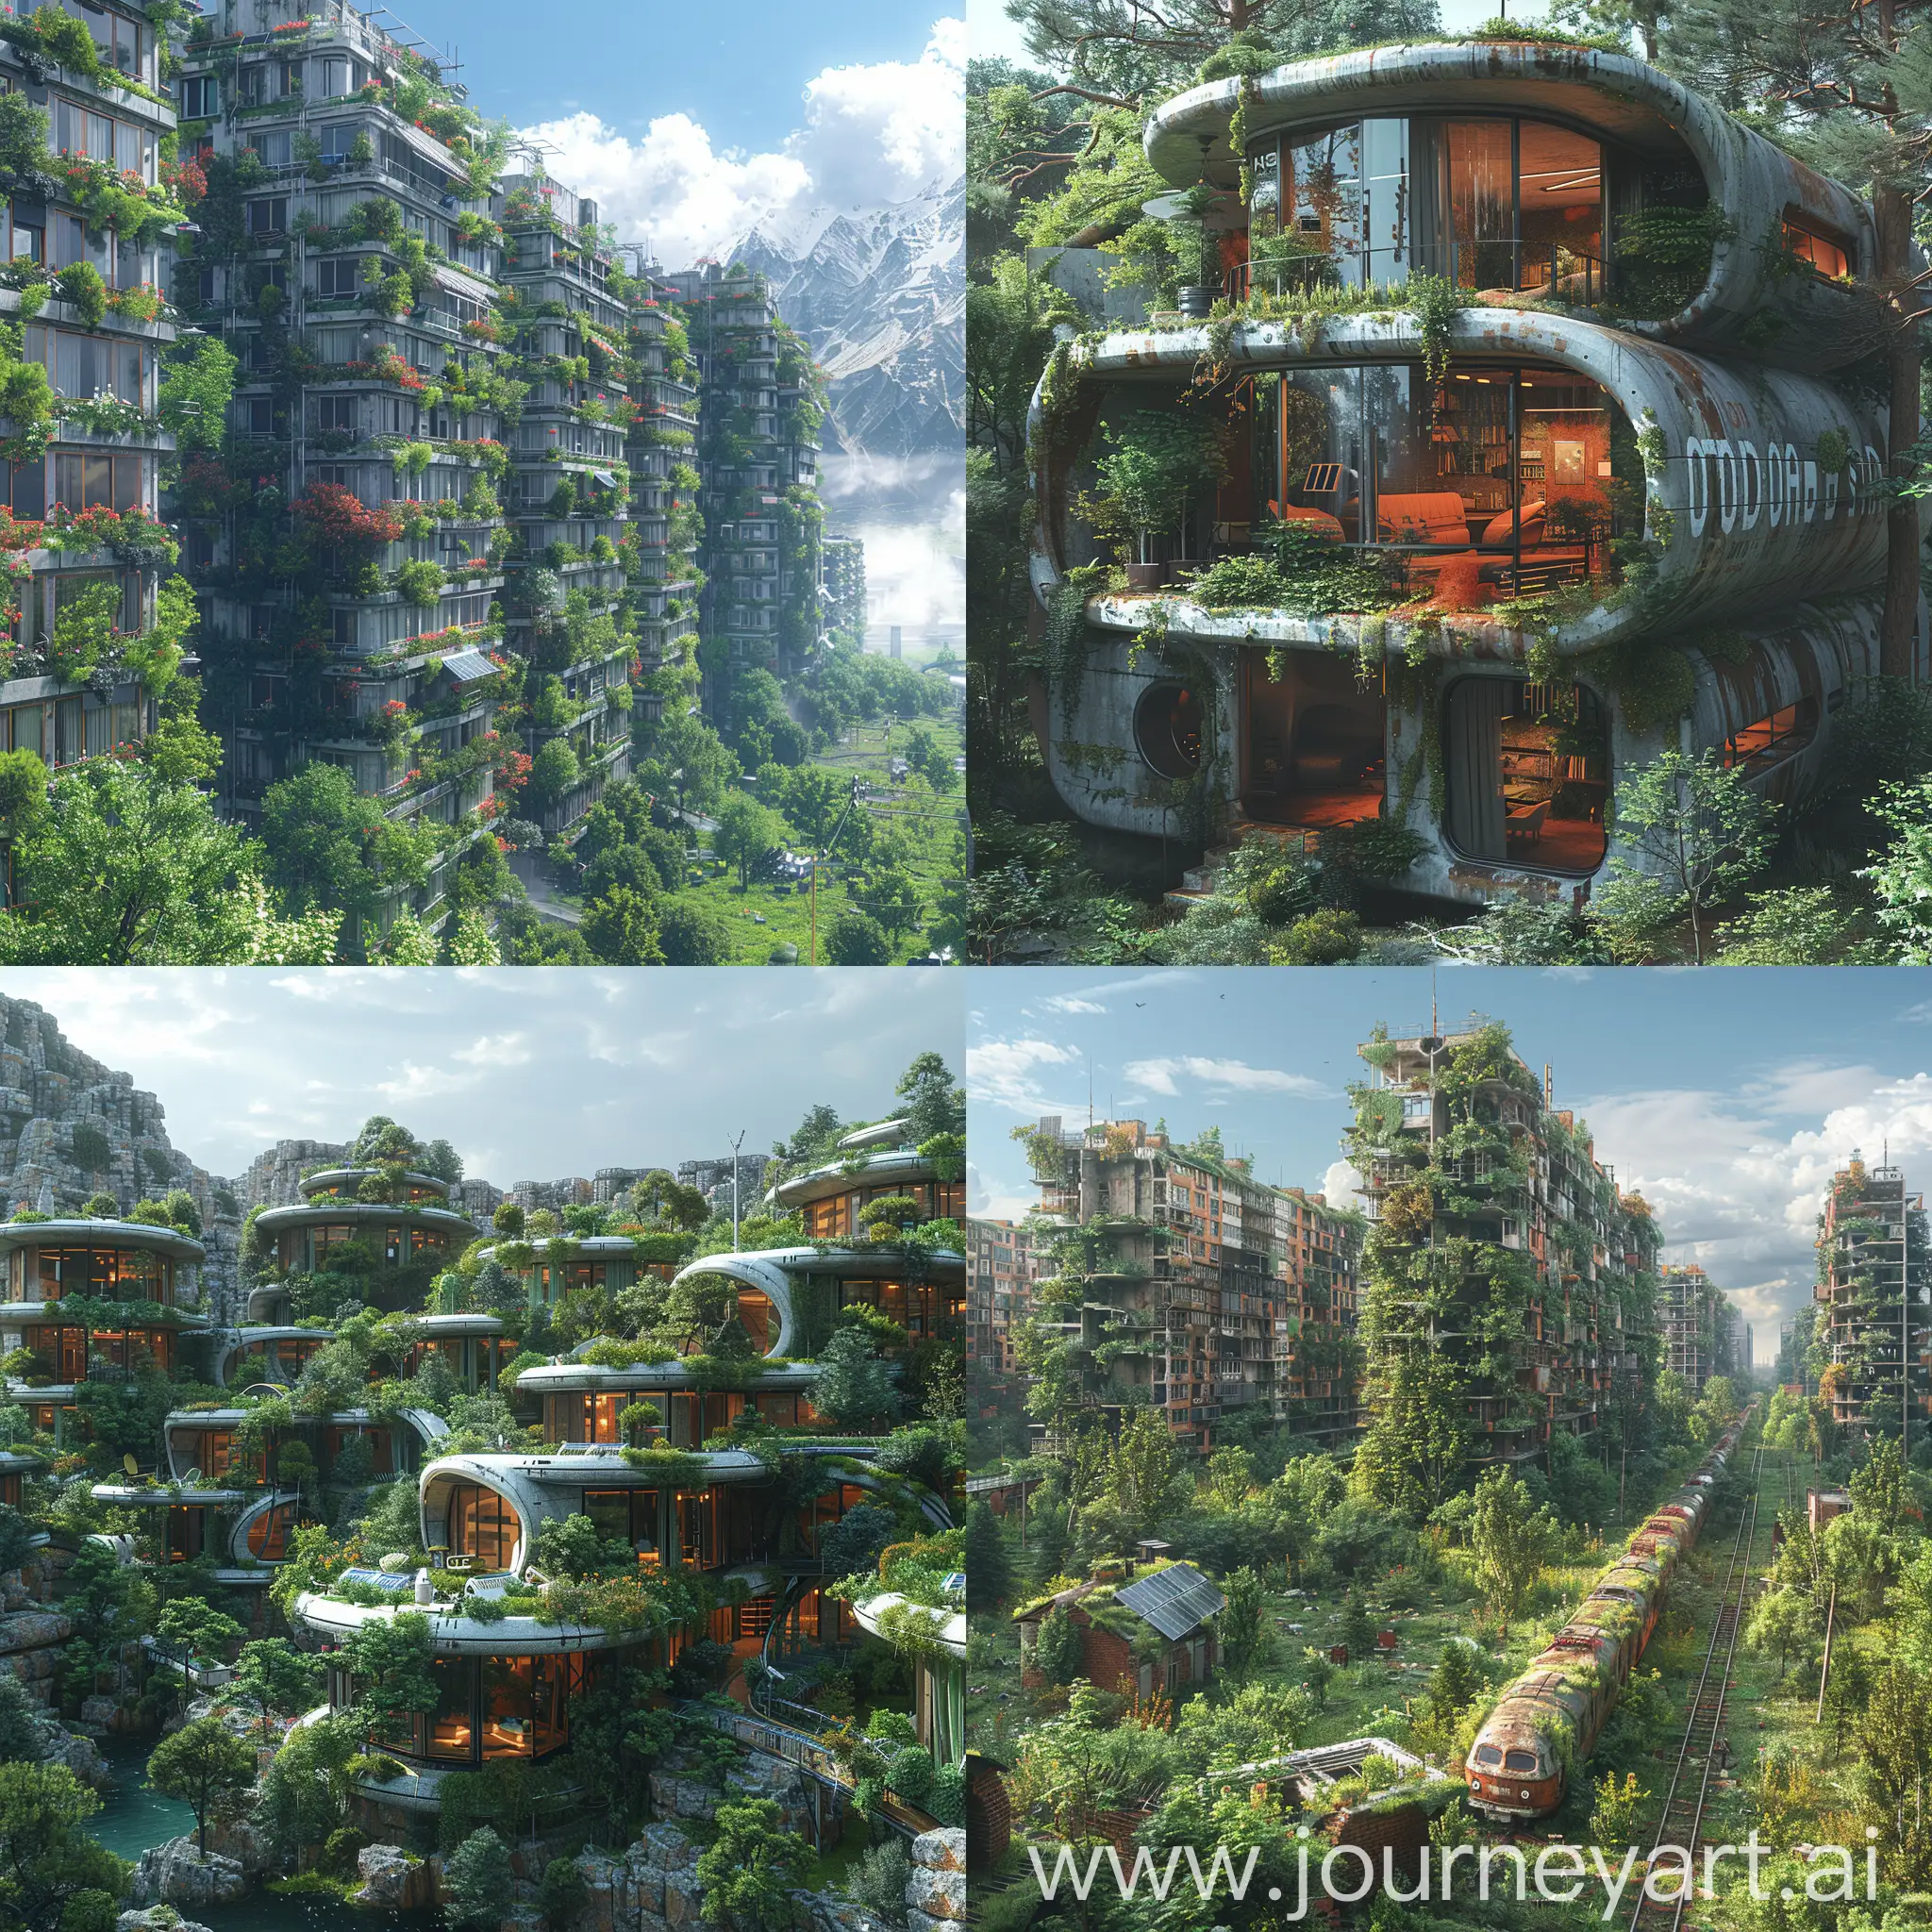 Futuristic-Pripyat-Urban-Landscape-with-Sustainable-Technologies